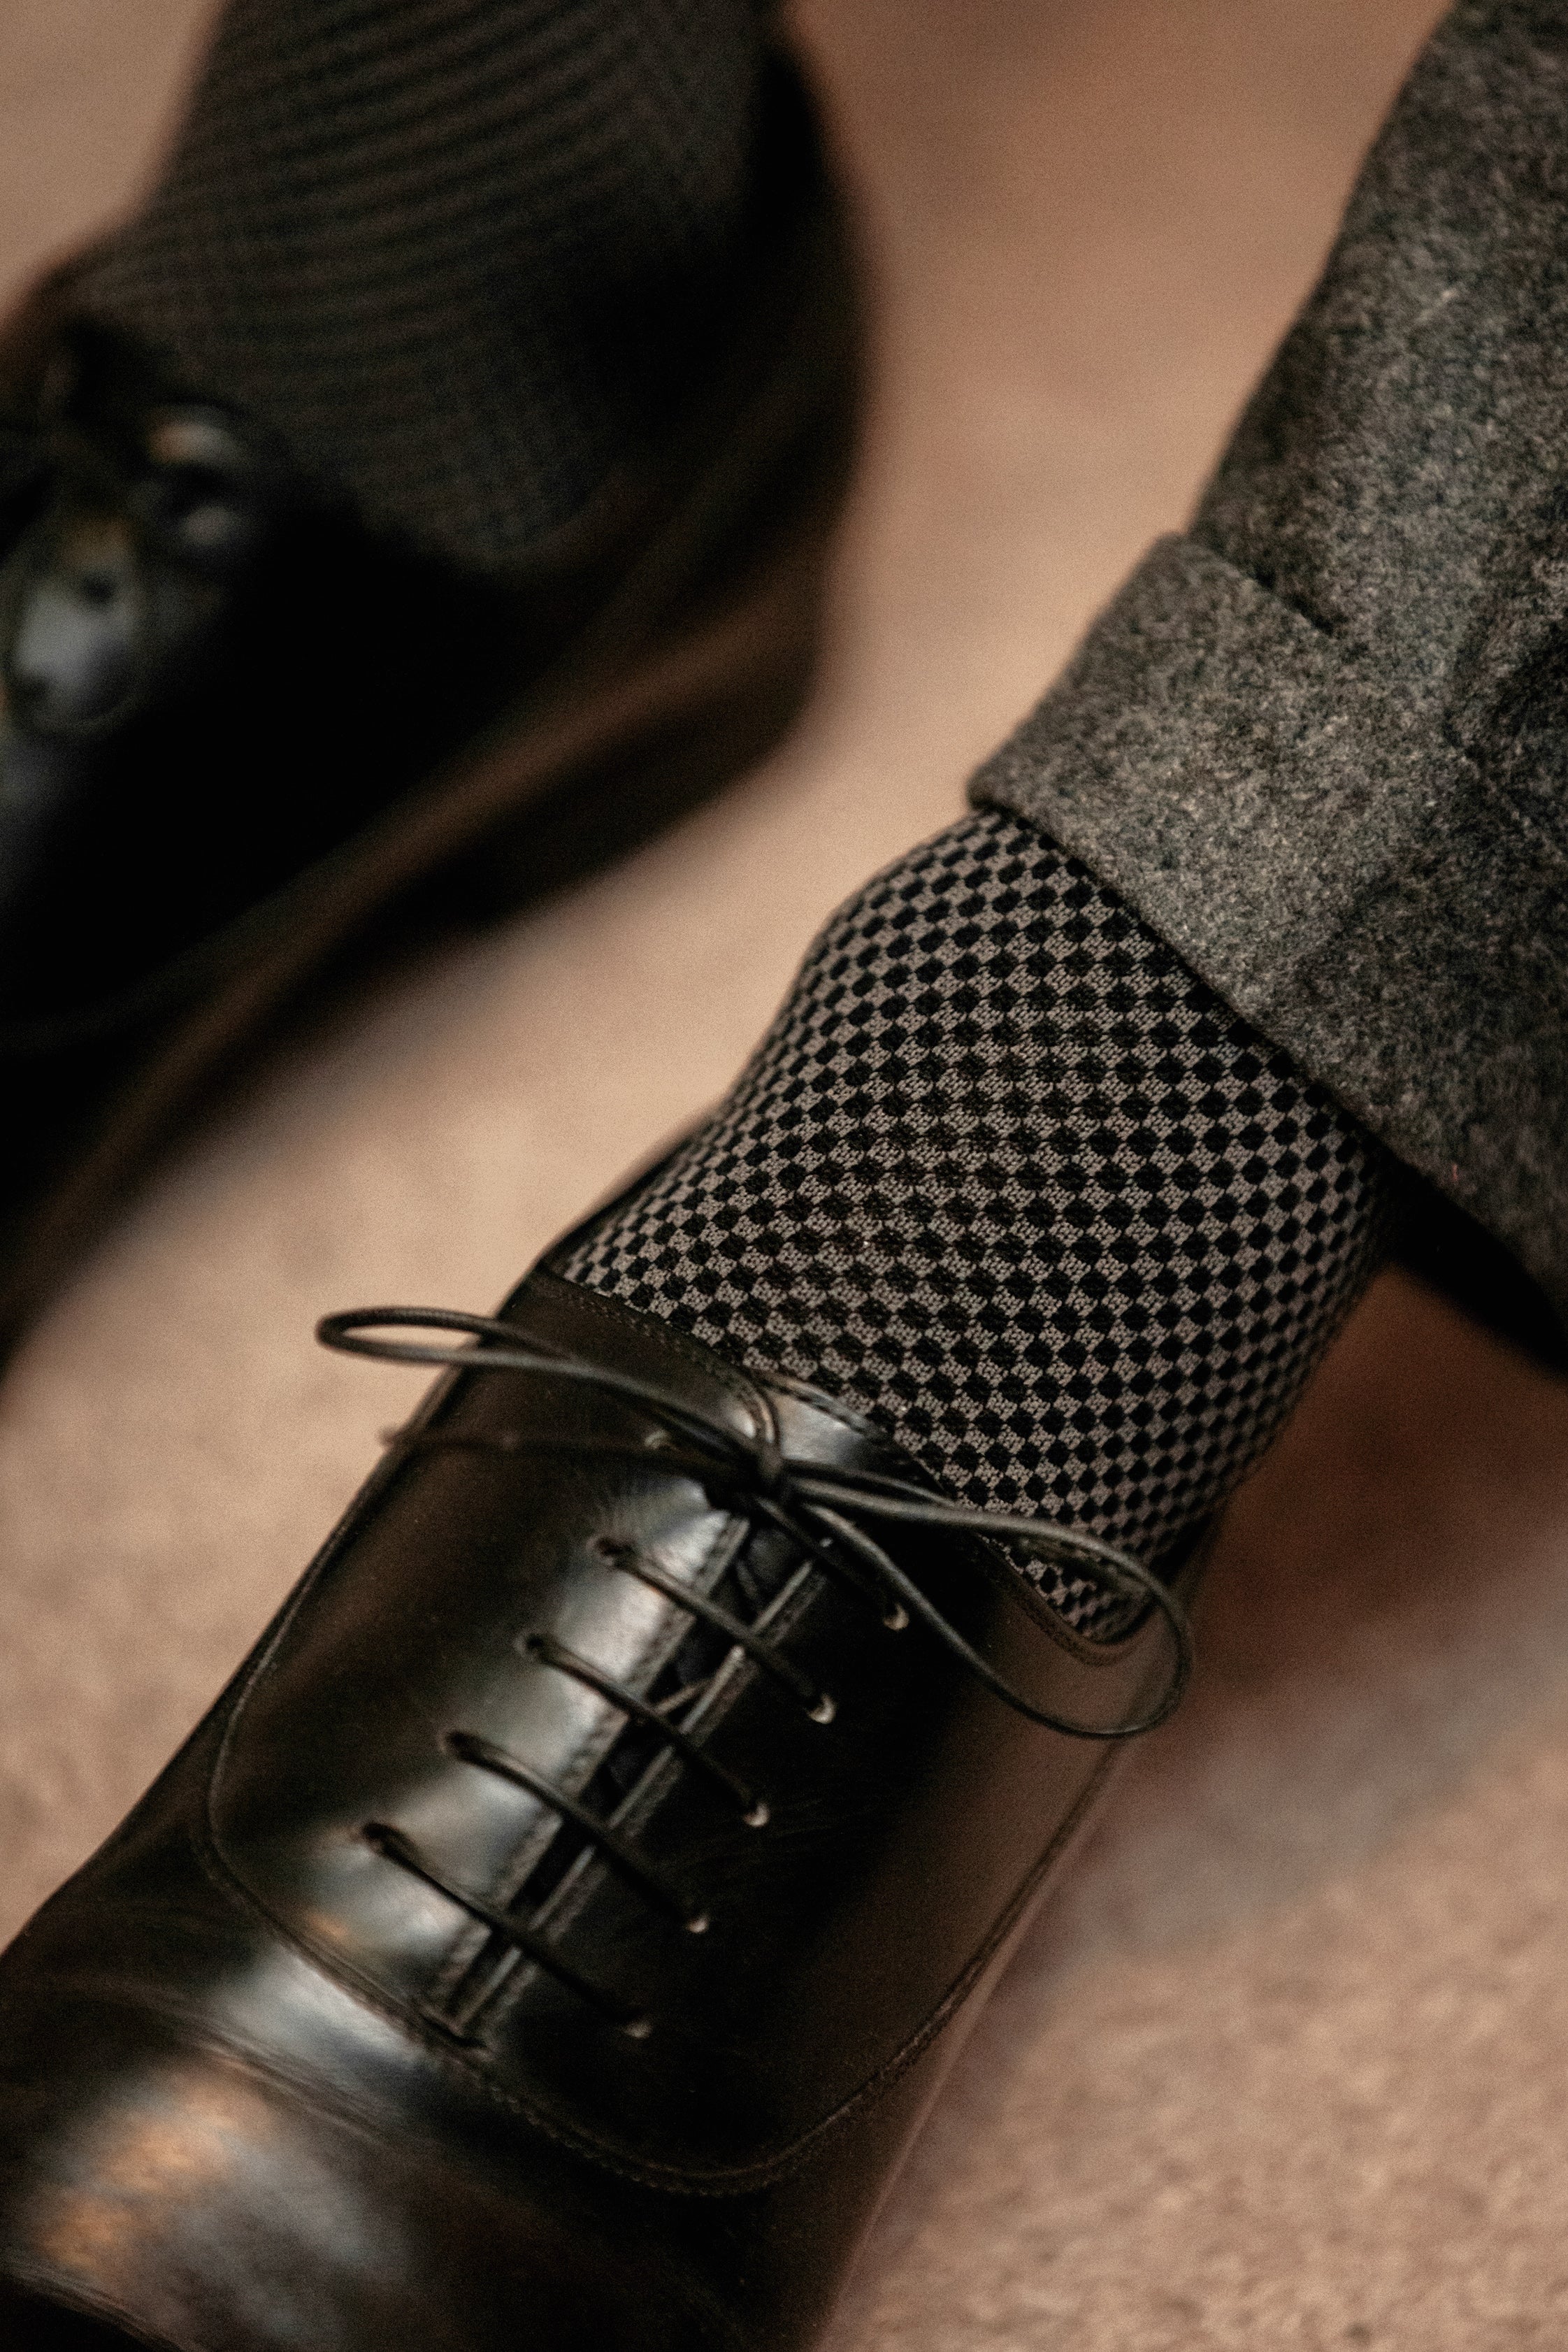 Men's compression stockings in black & gray cotton - Class 2